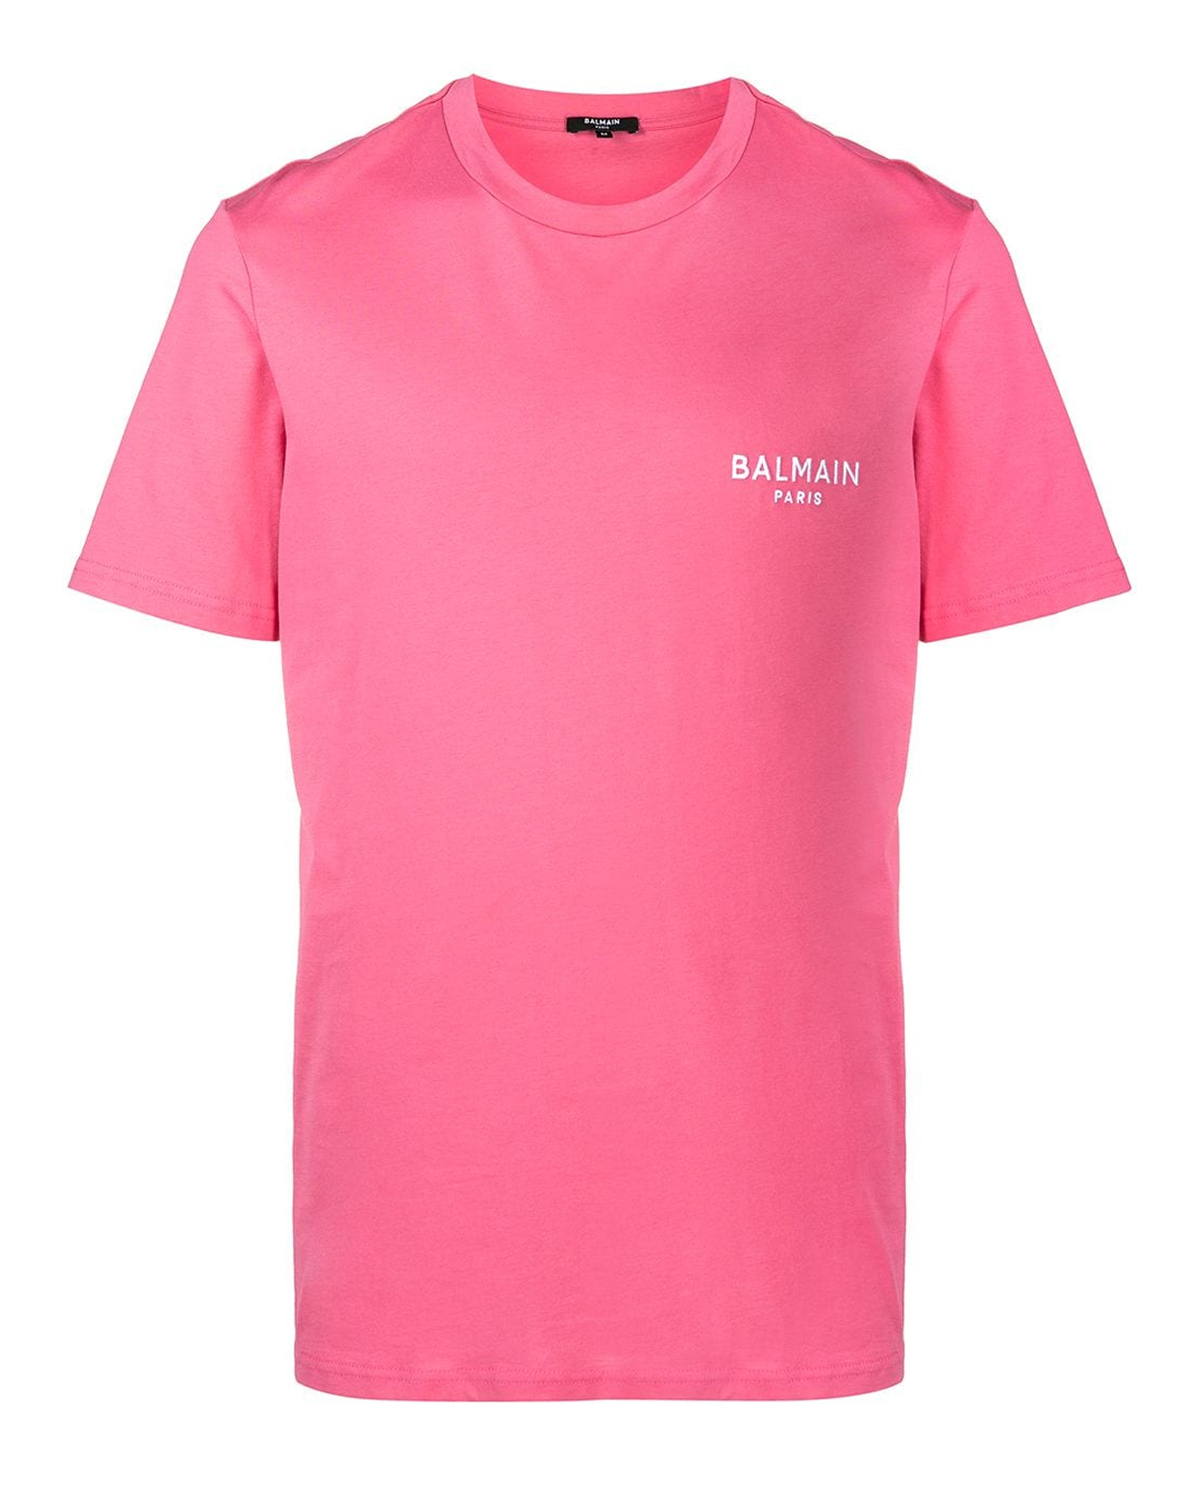 BALMAIN - Różowy t-shirt z logo BRM305210